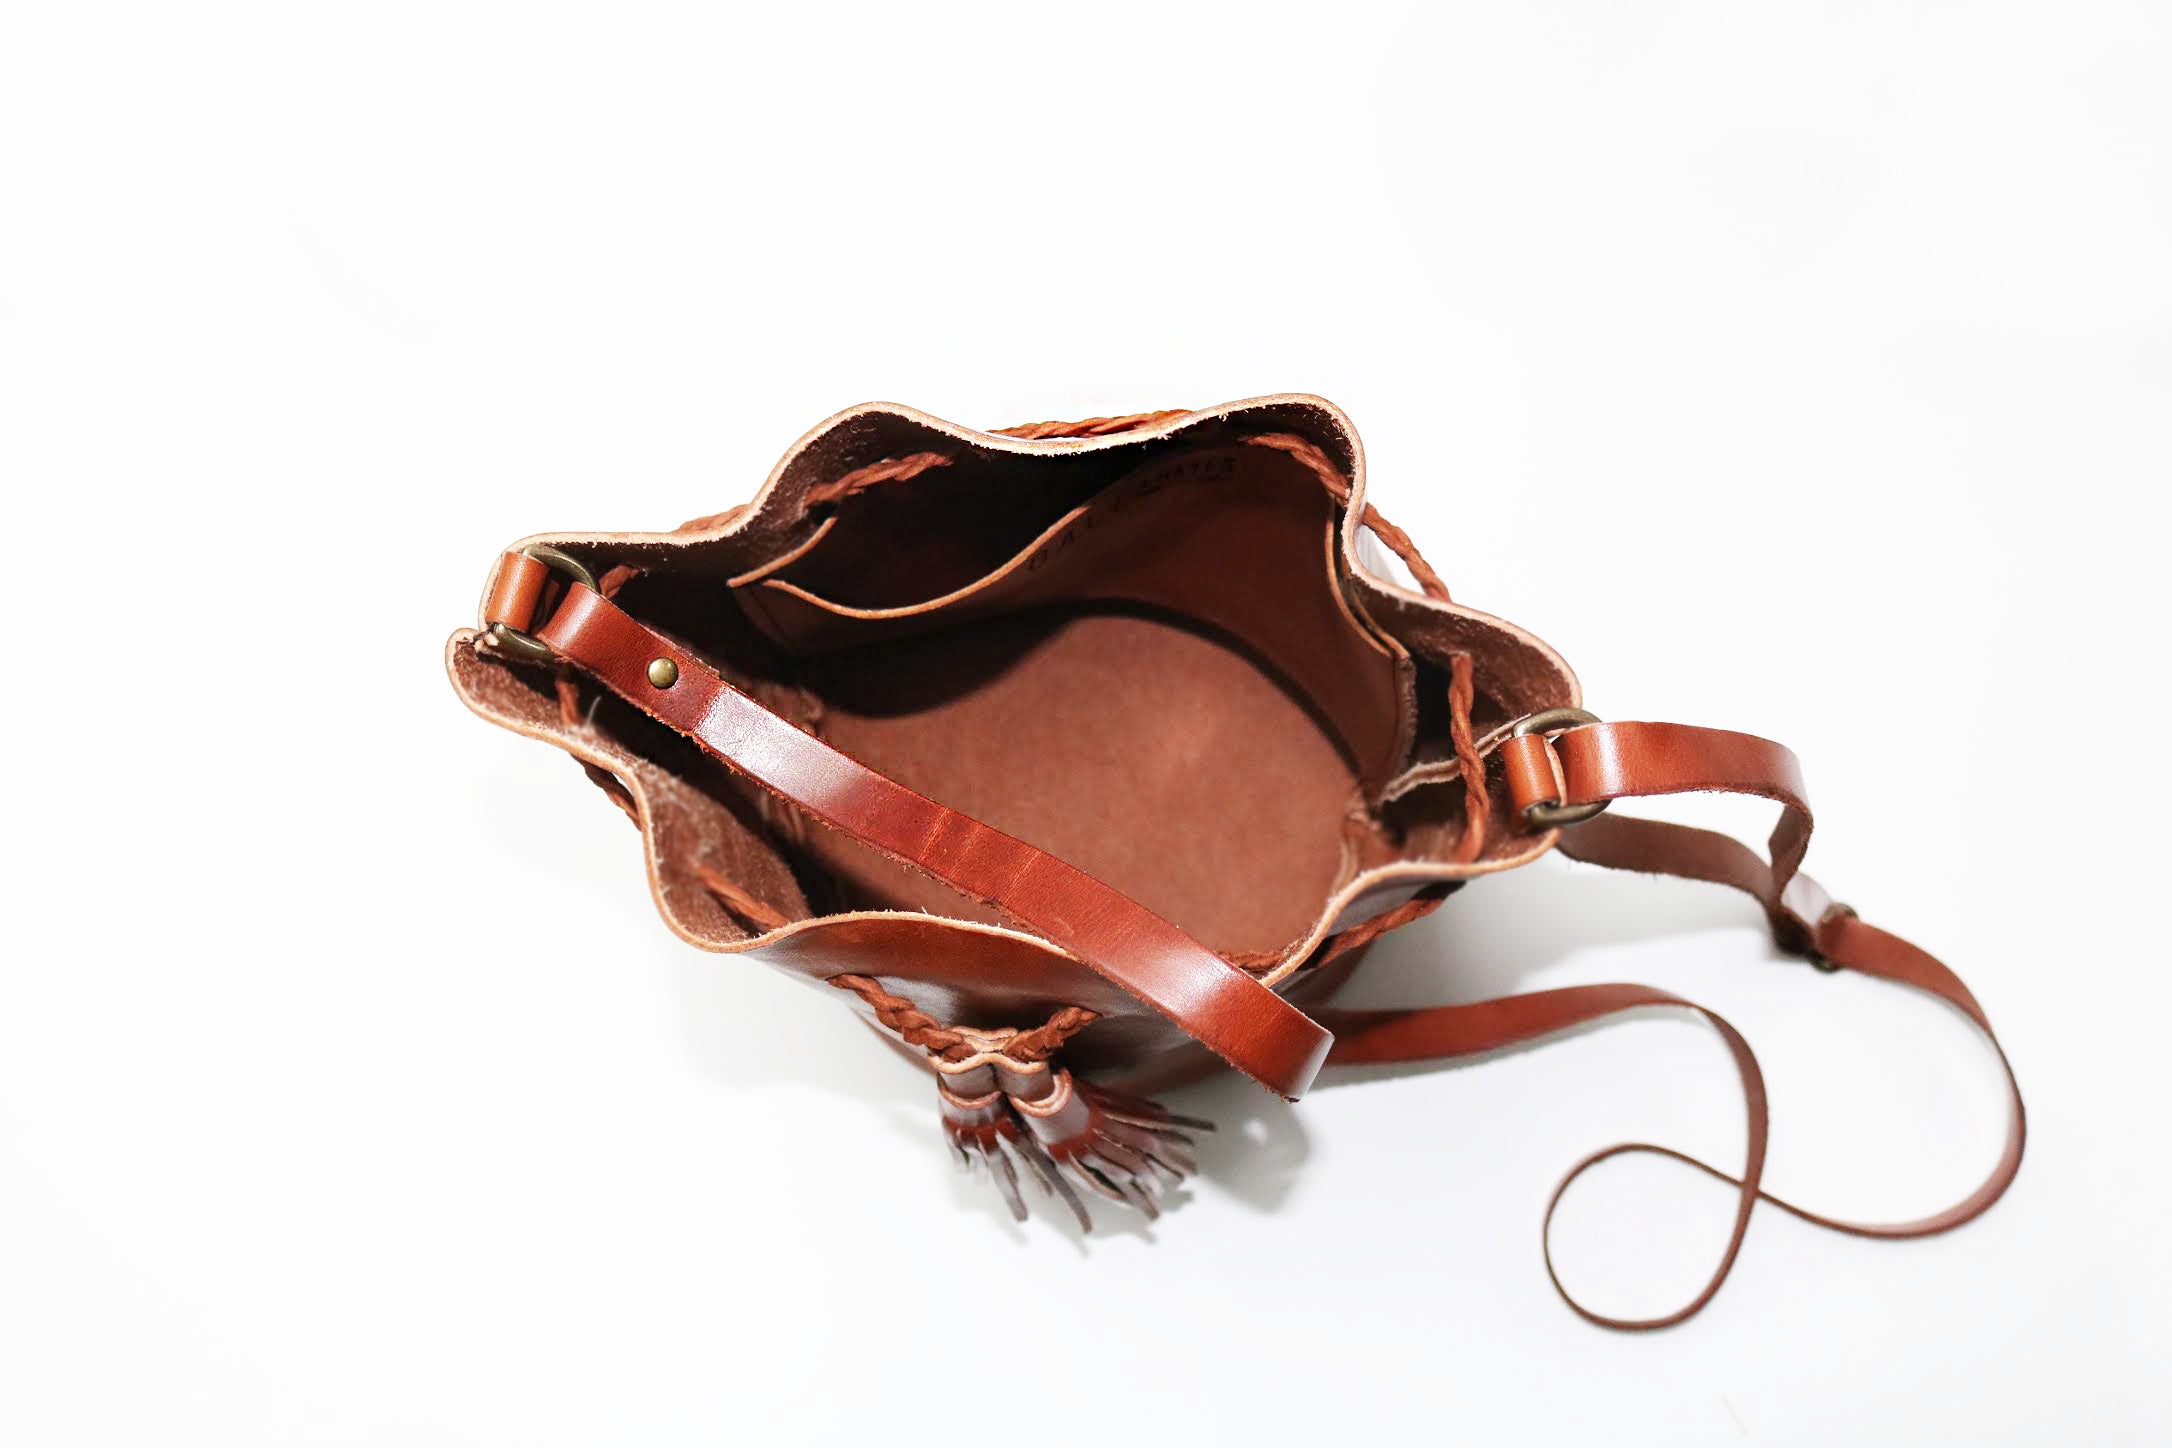 Vegetable Tanned Leather Drawstring Bucket Bag